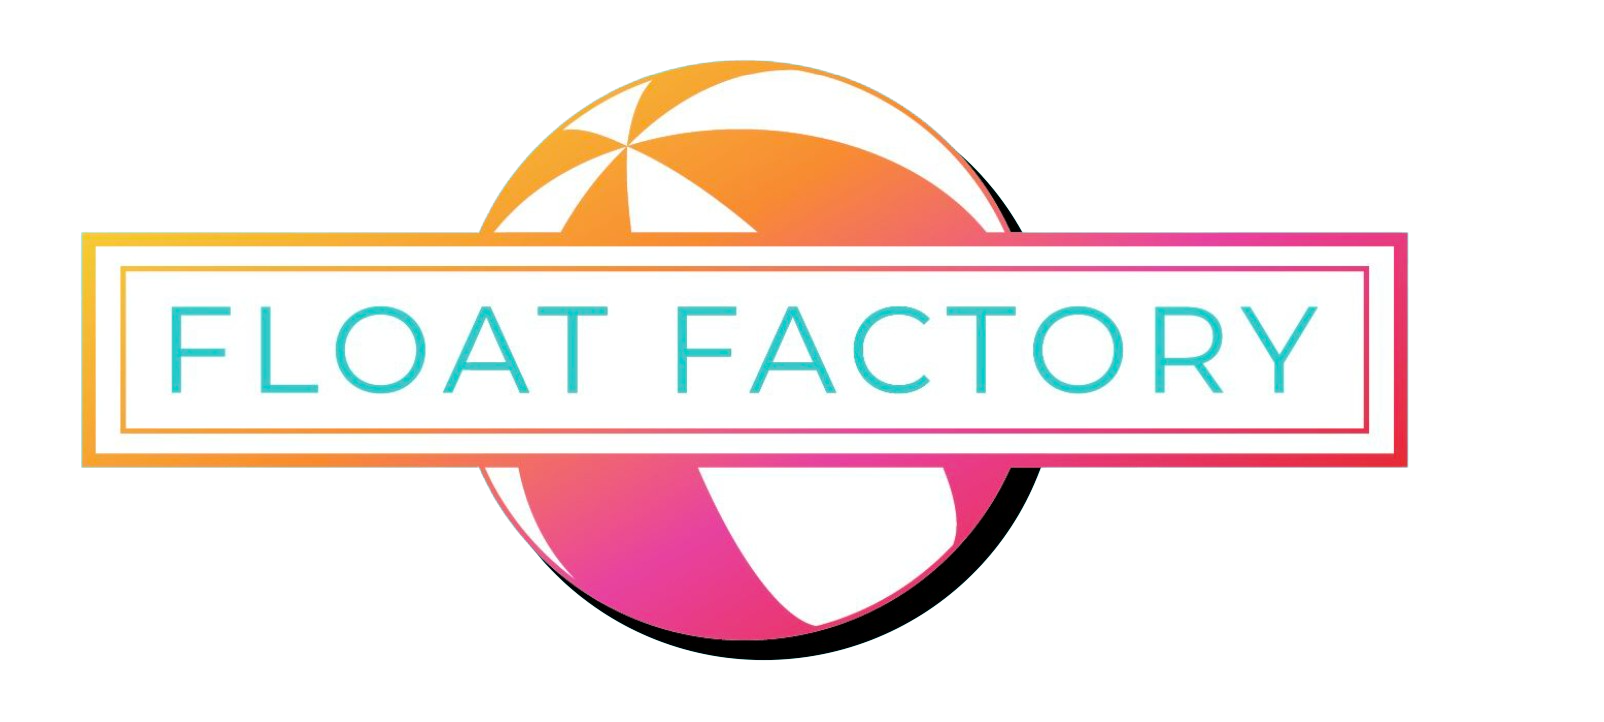 Float Factory logo